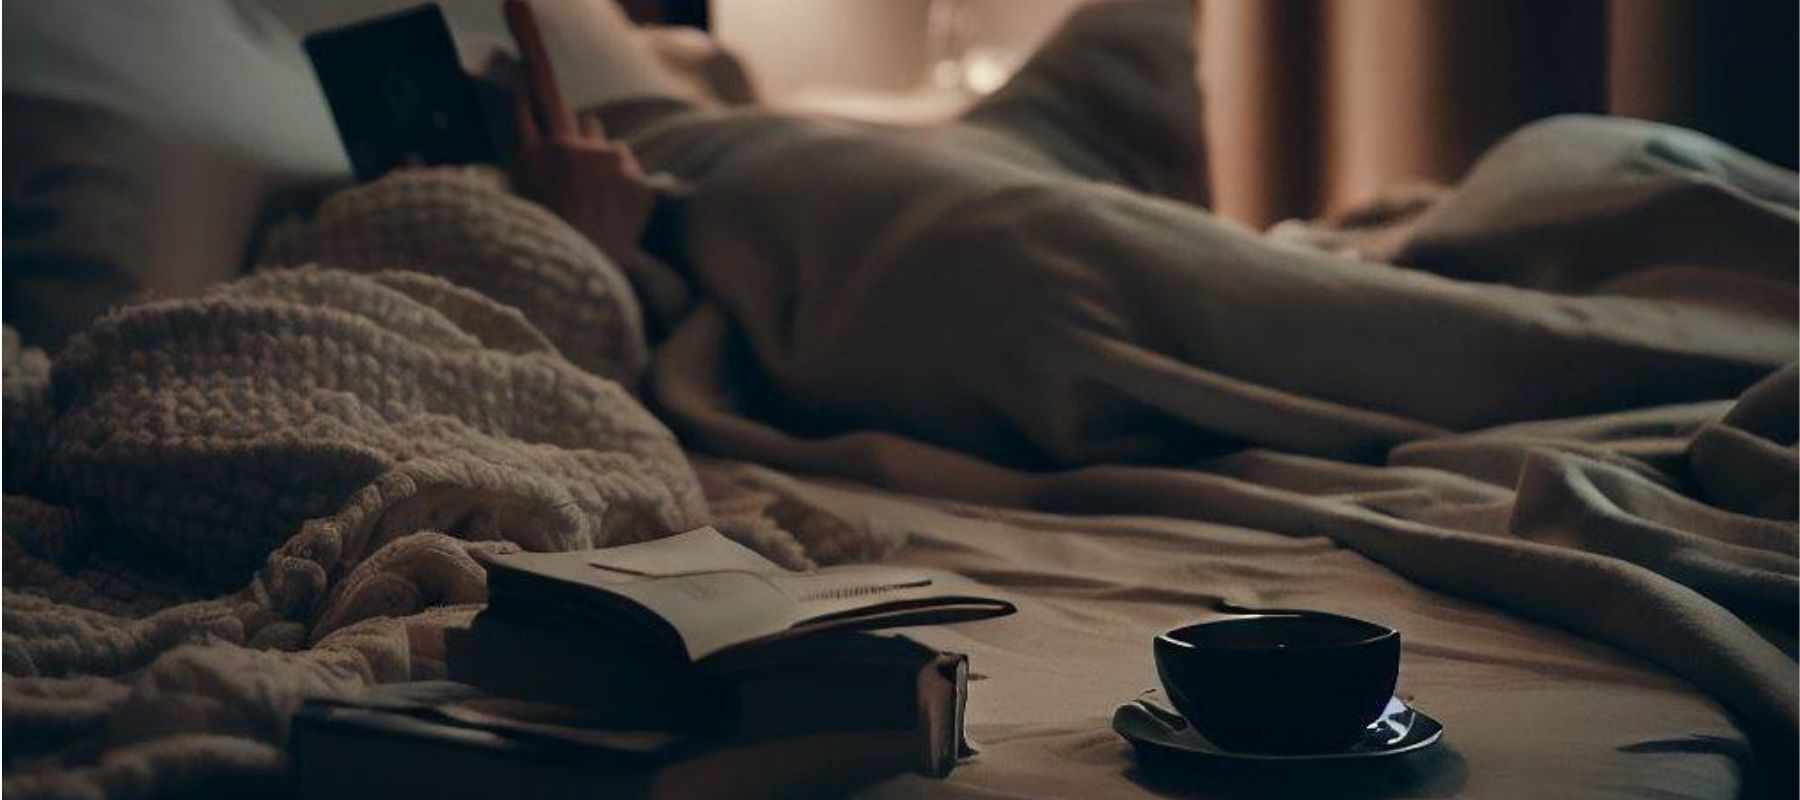 buy-online-mattress-reading-in-bed